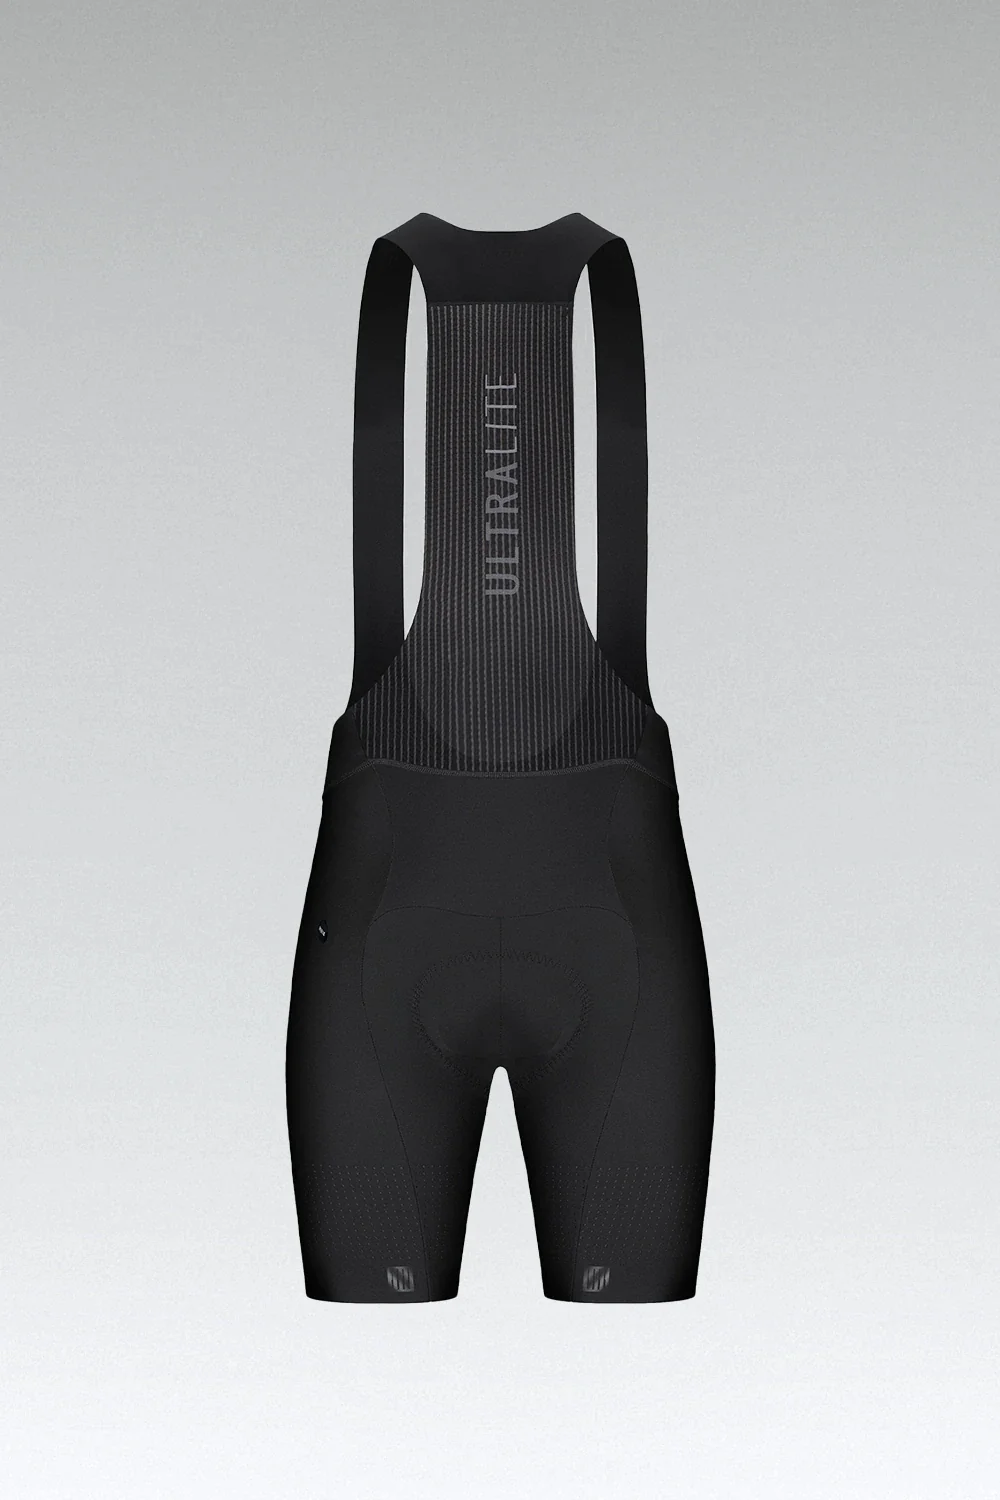 Gobik Men's Bib Shorts | Ultralite K12 | Black